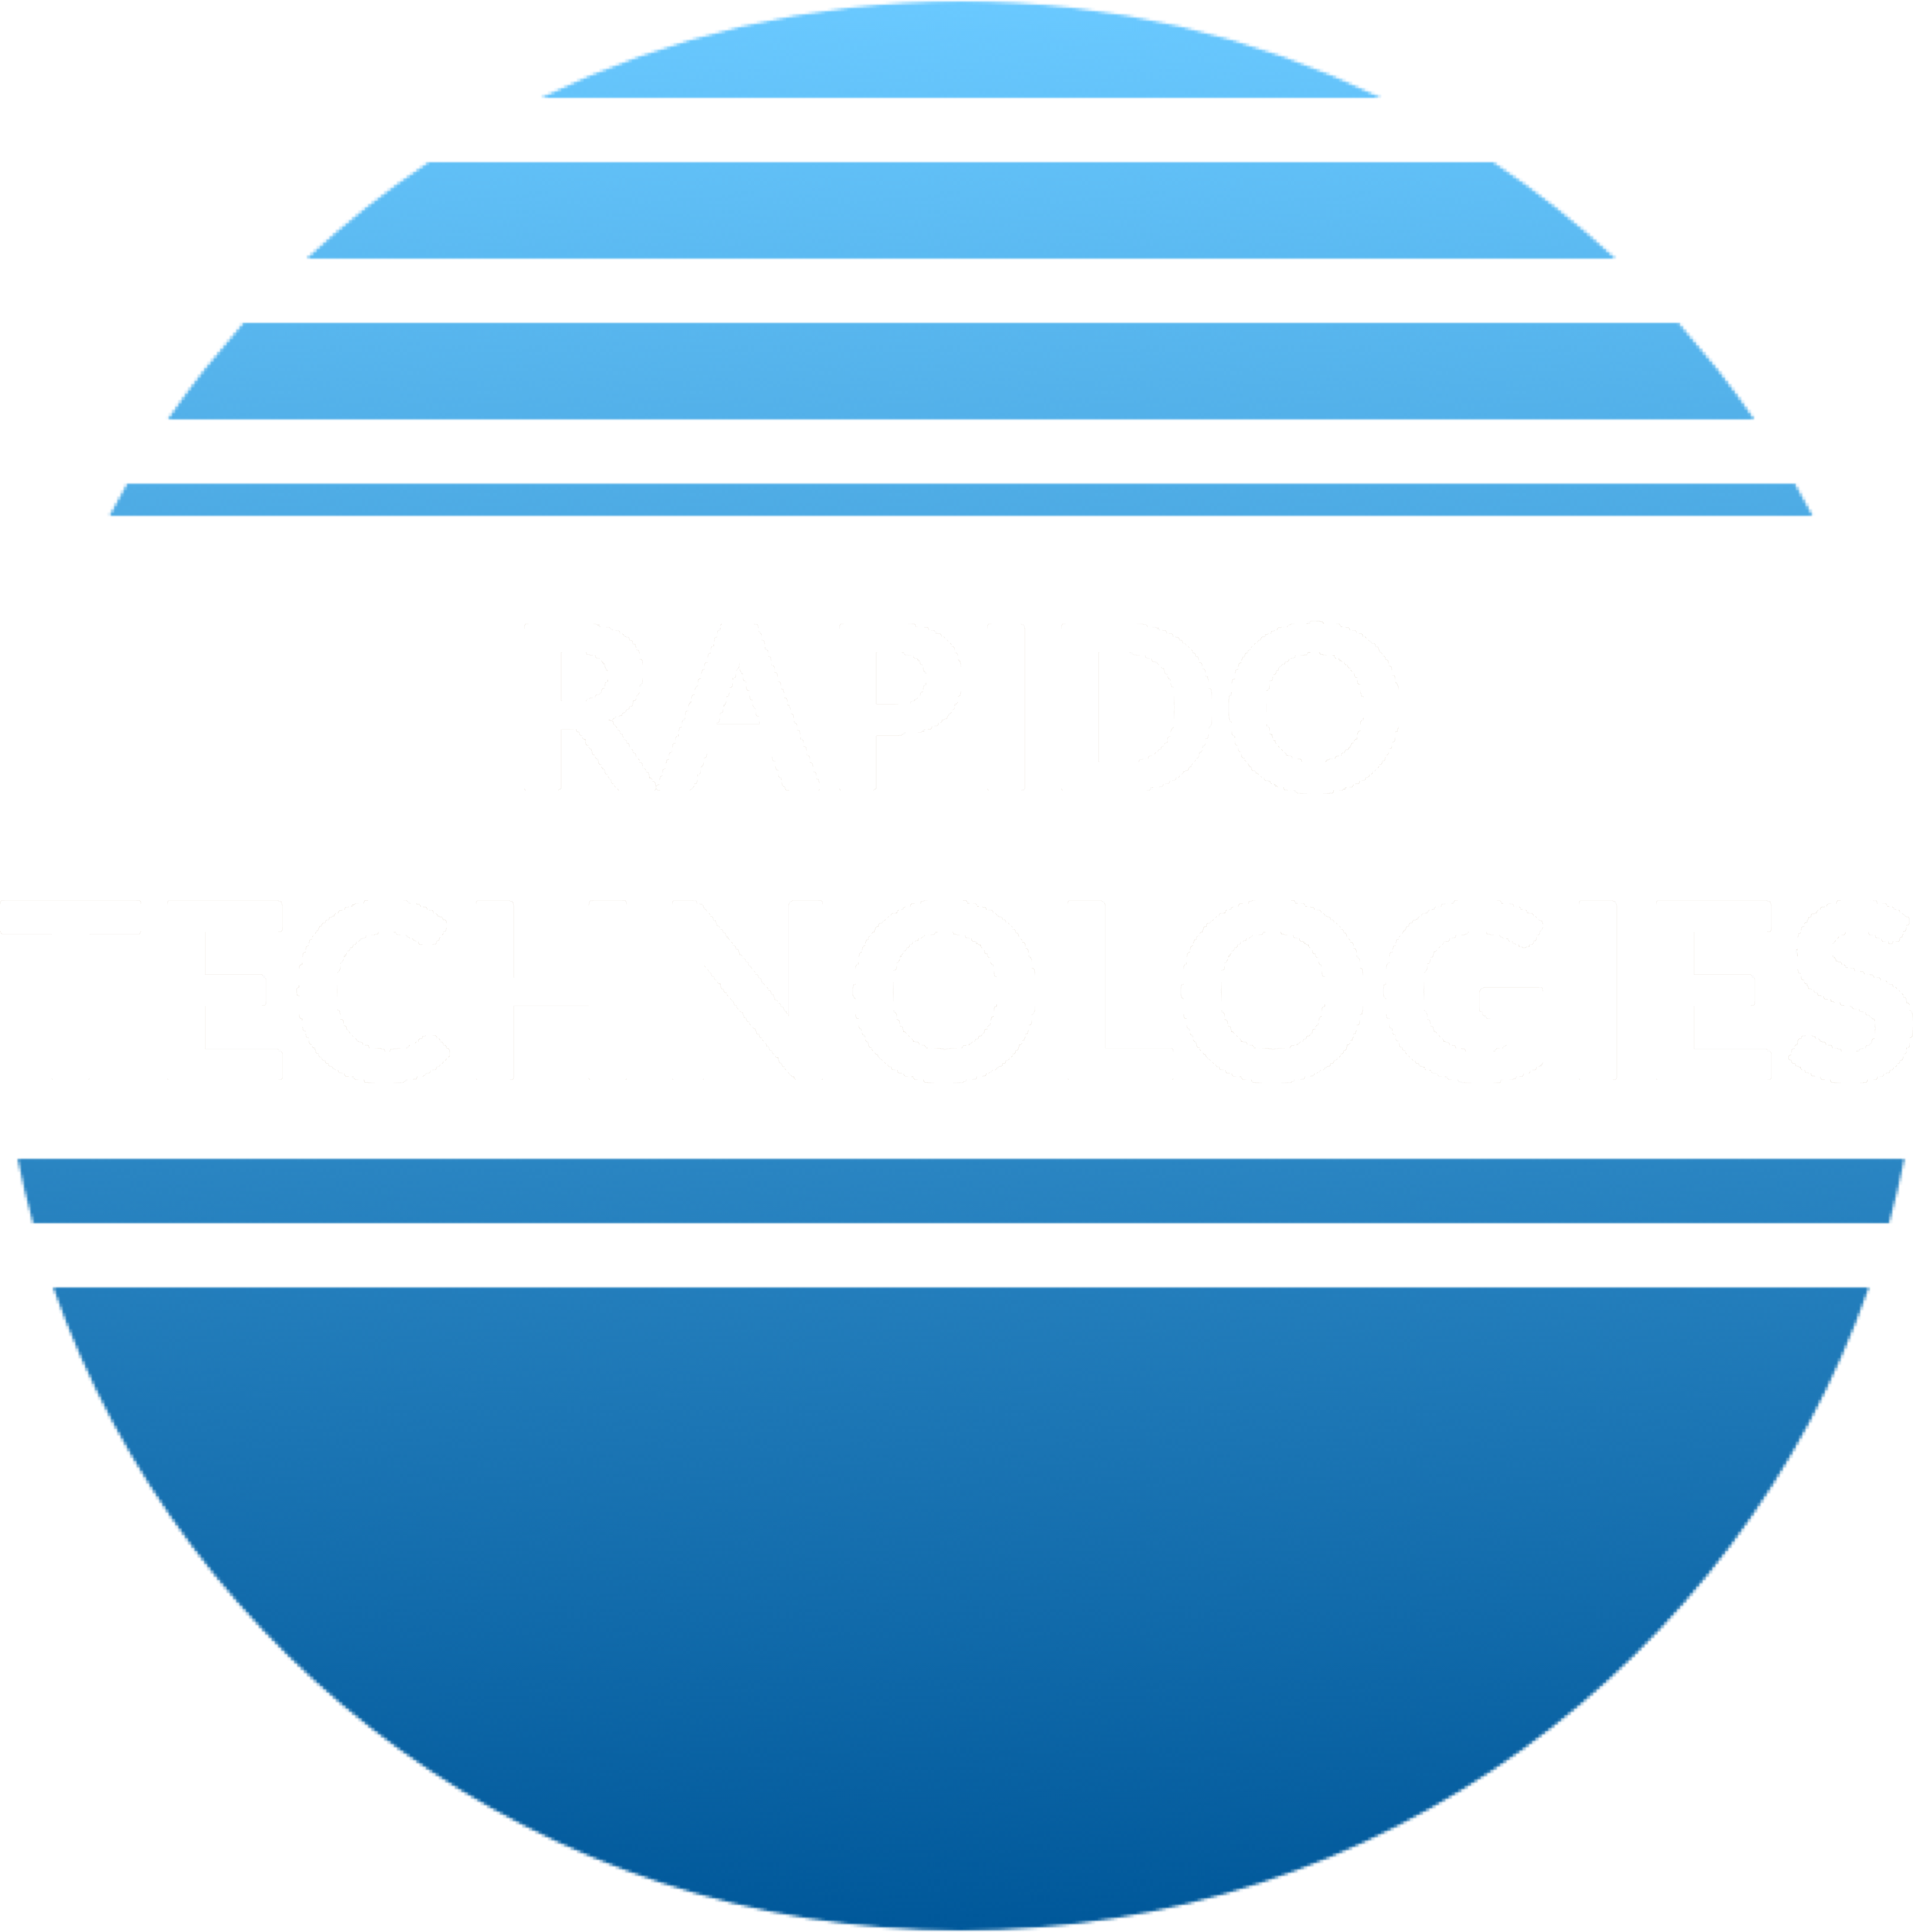 Rapido Technologies